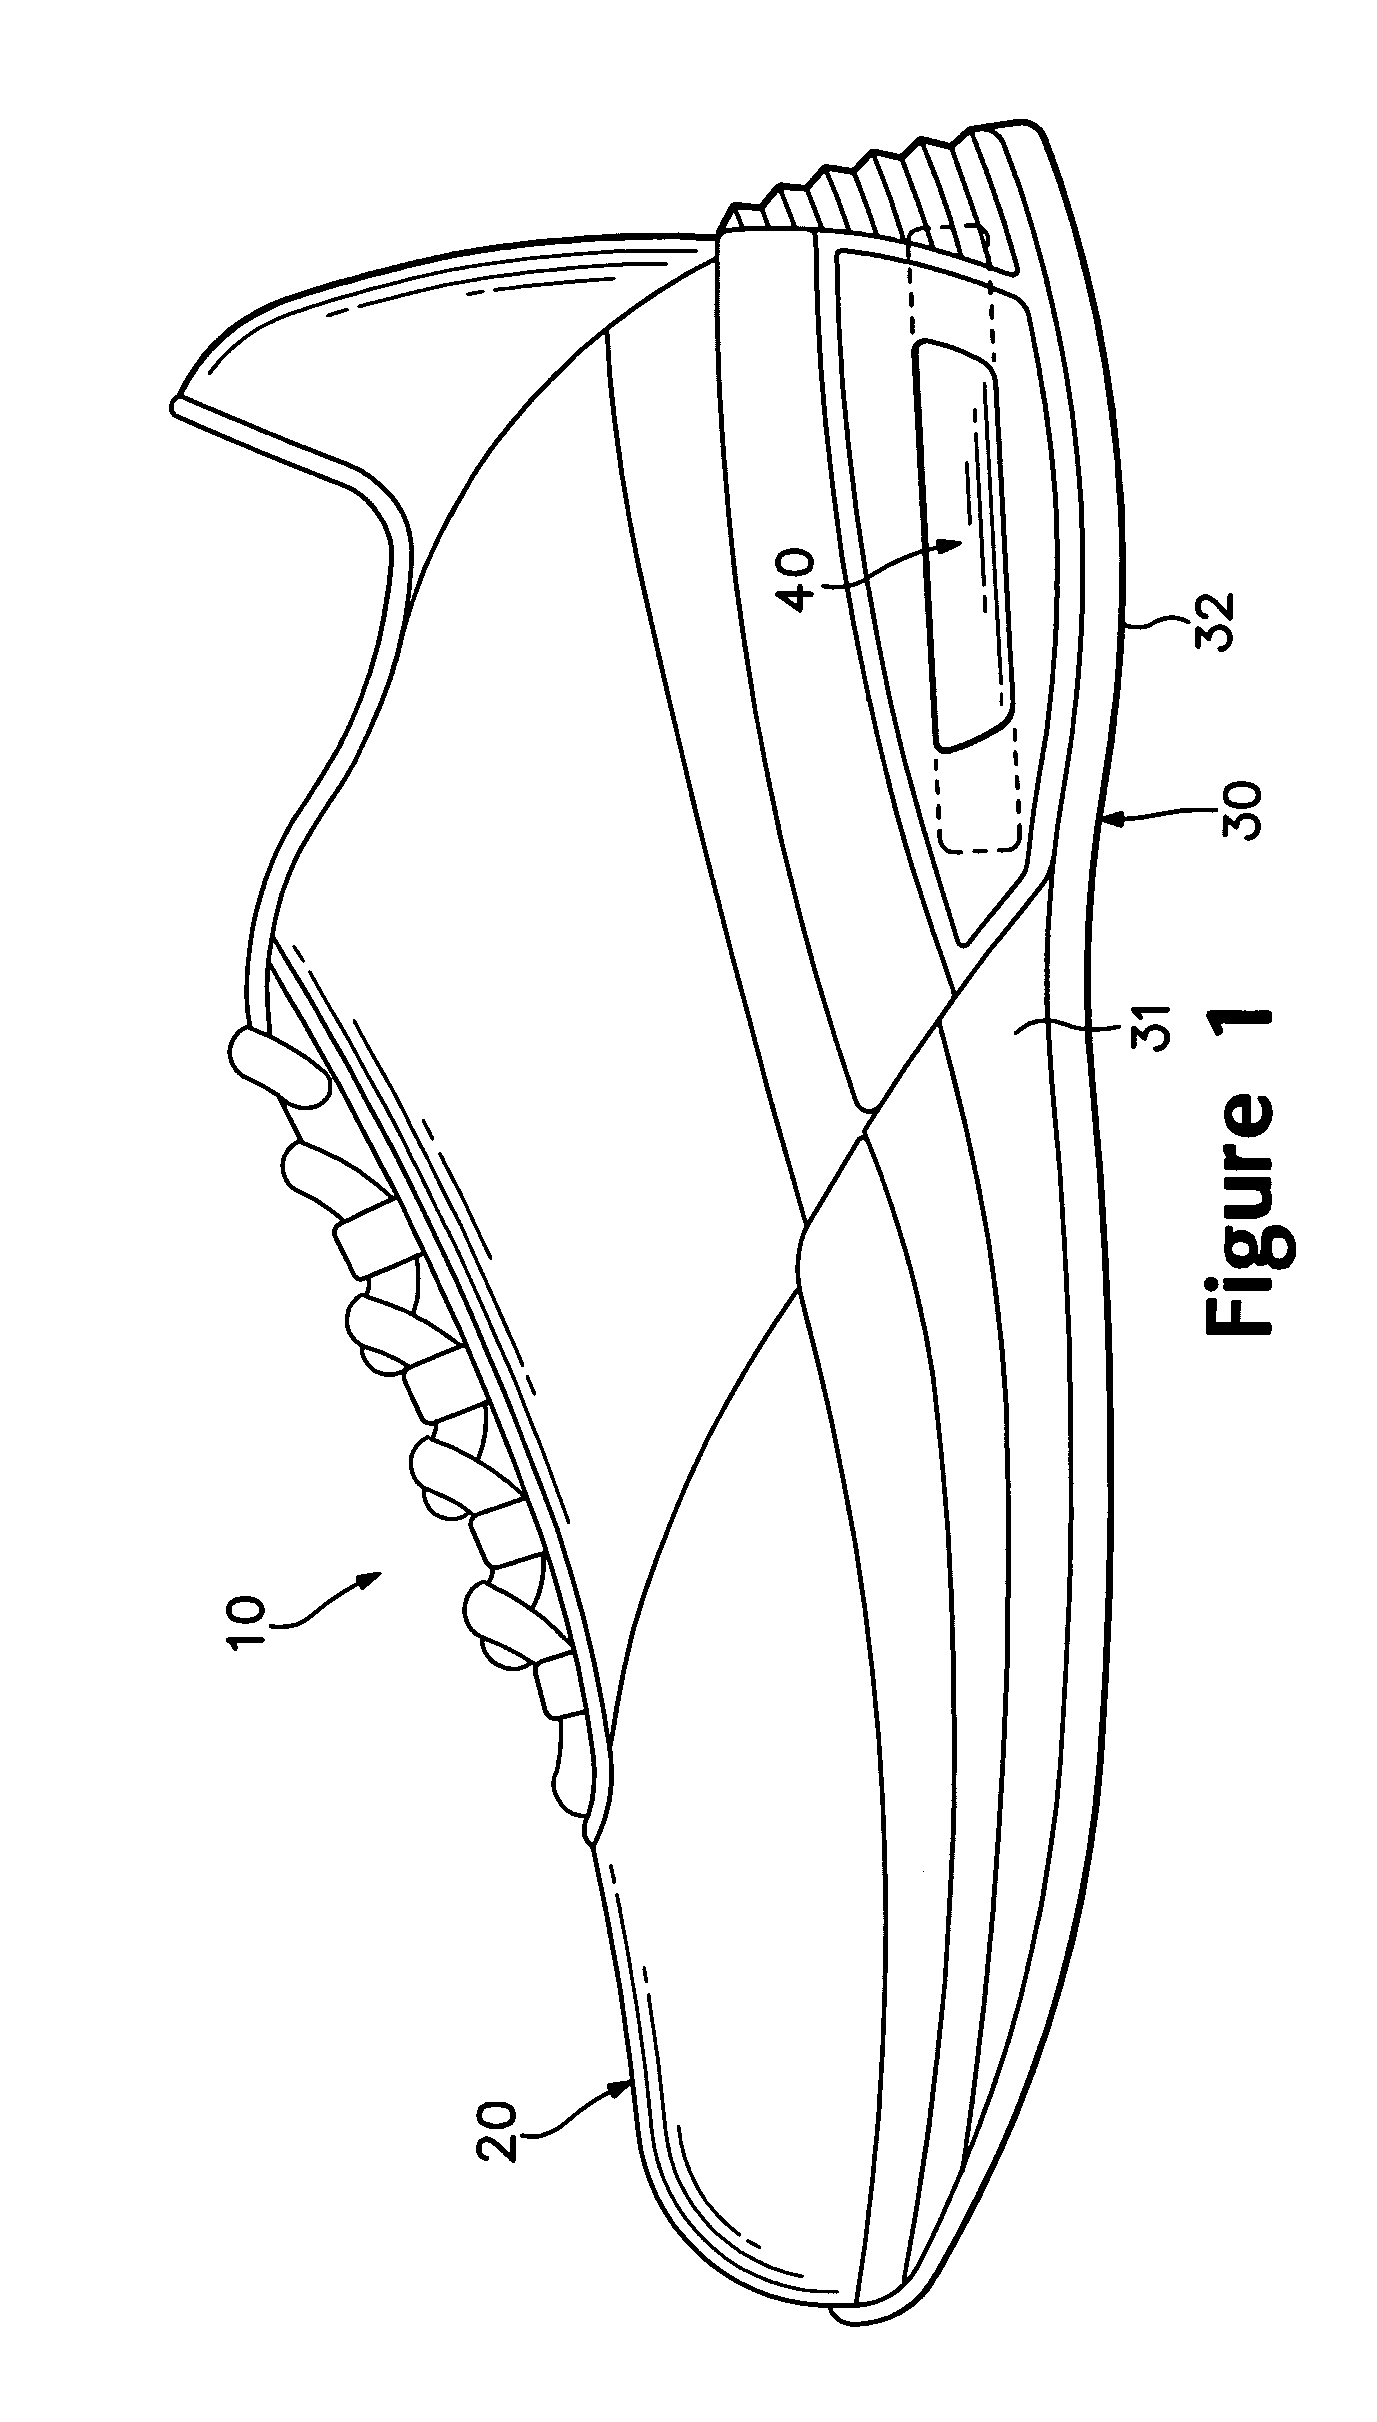 Fluid-filled bladder incorporating a foam tensile member